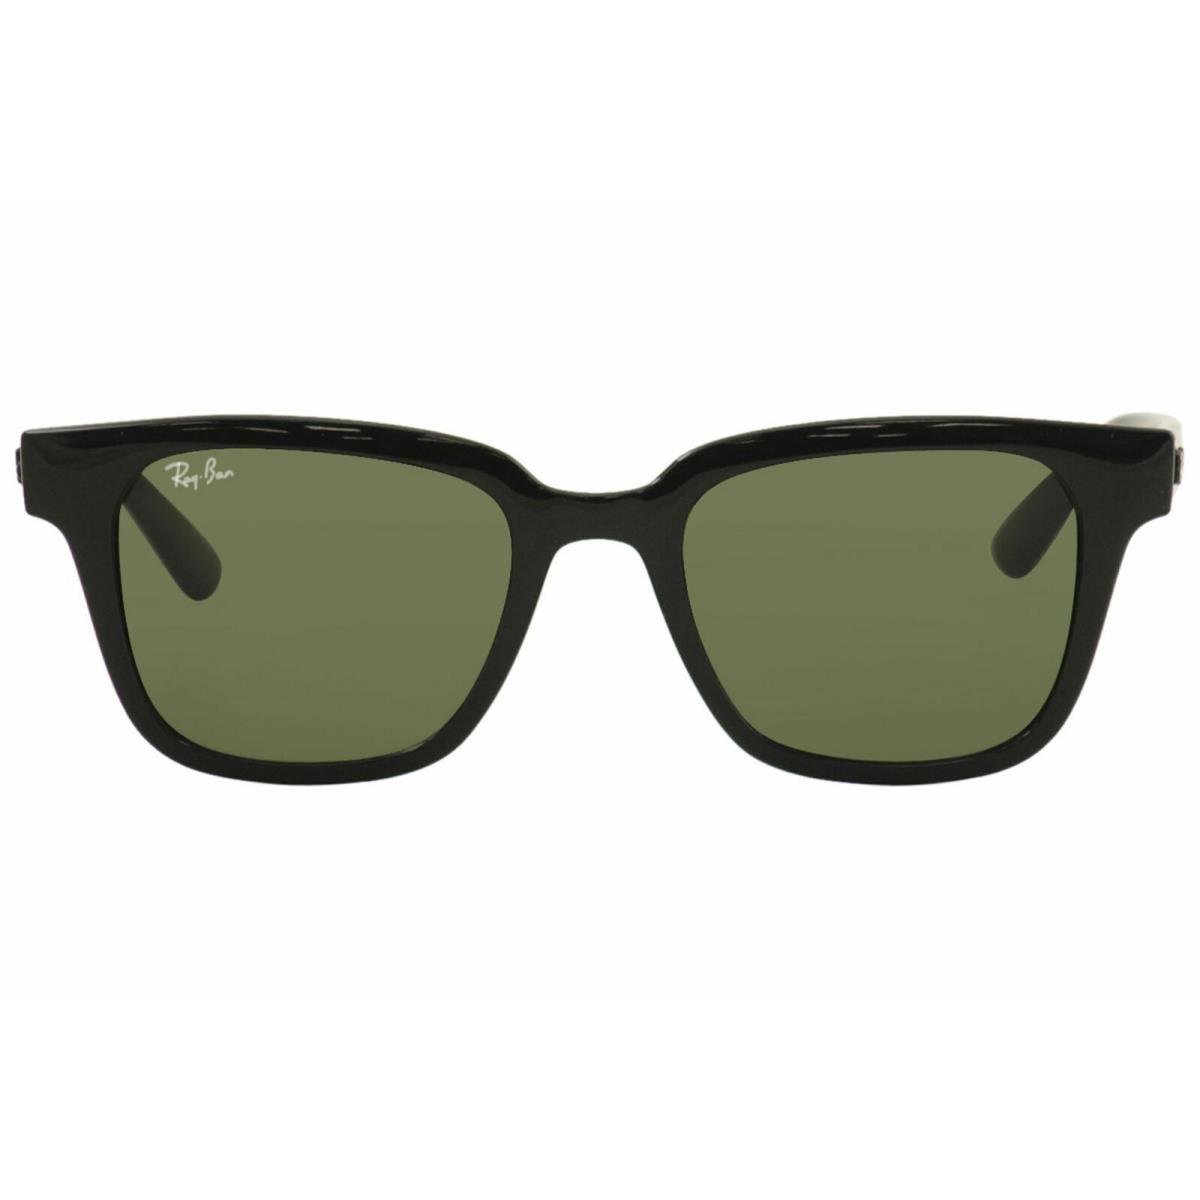 Ray-ban RB 4323 Black/green 601/31 Sunglasses